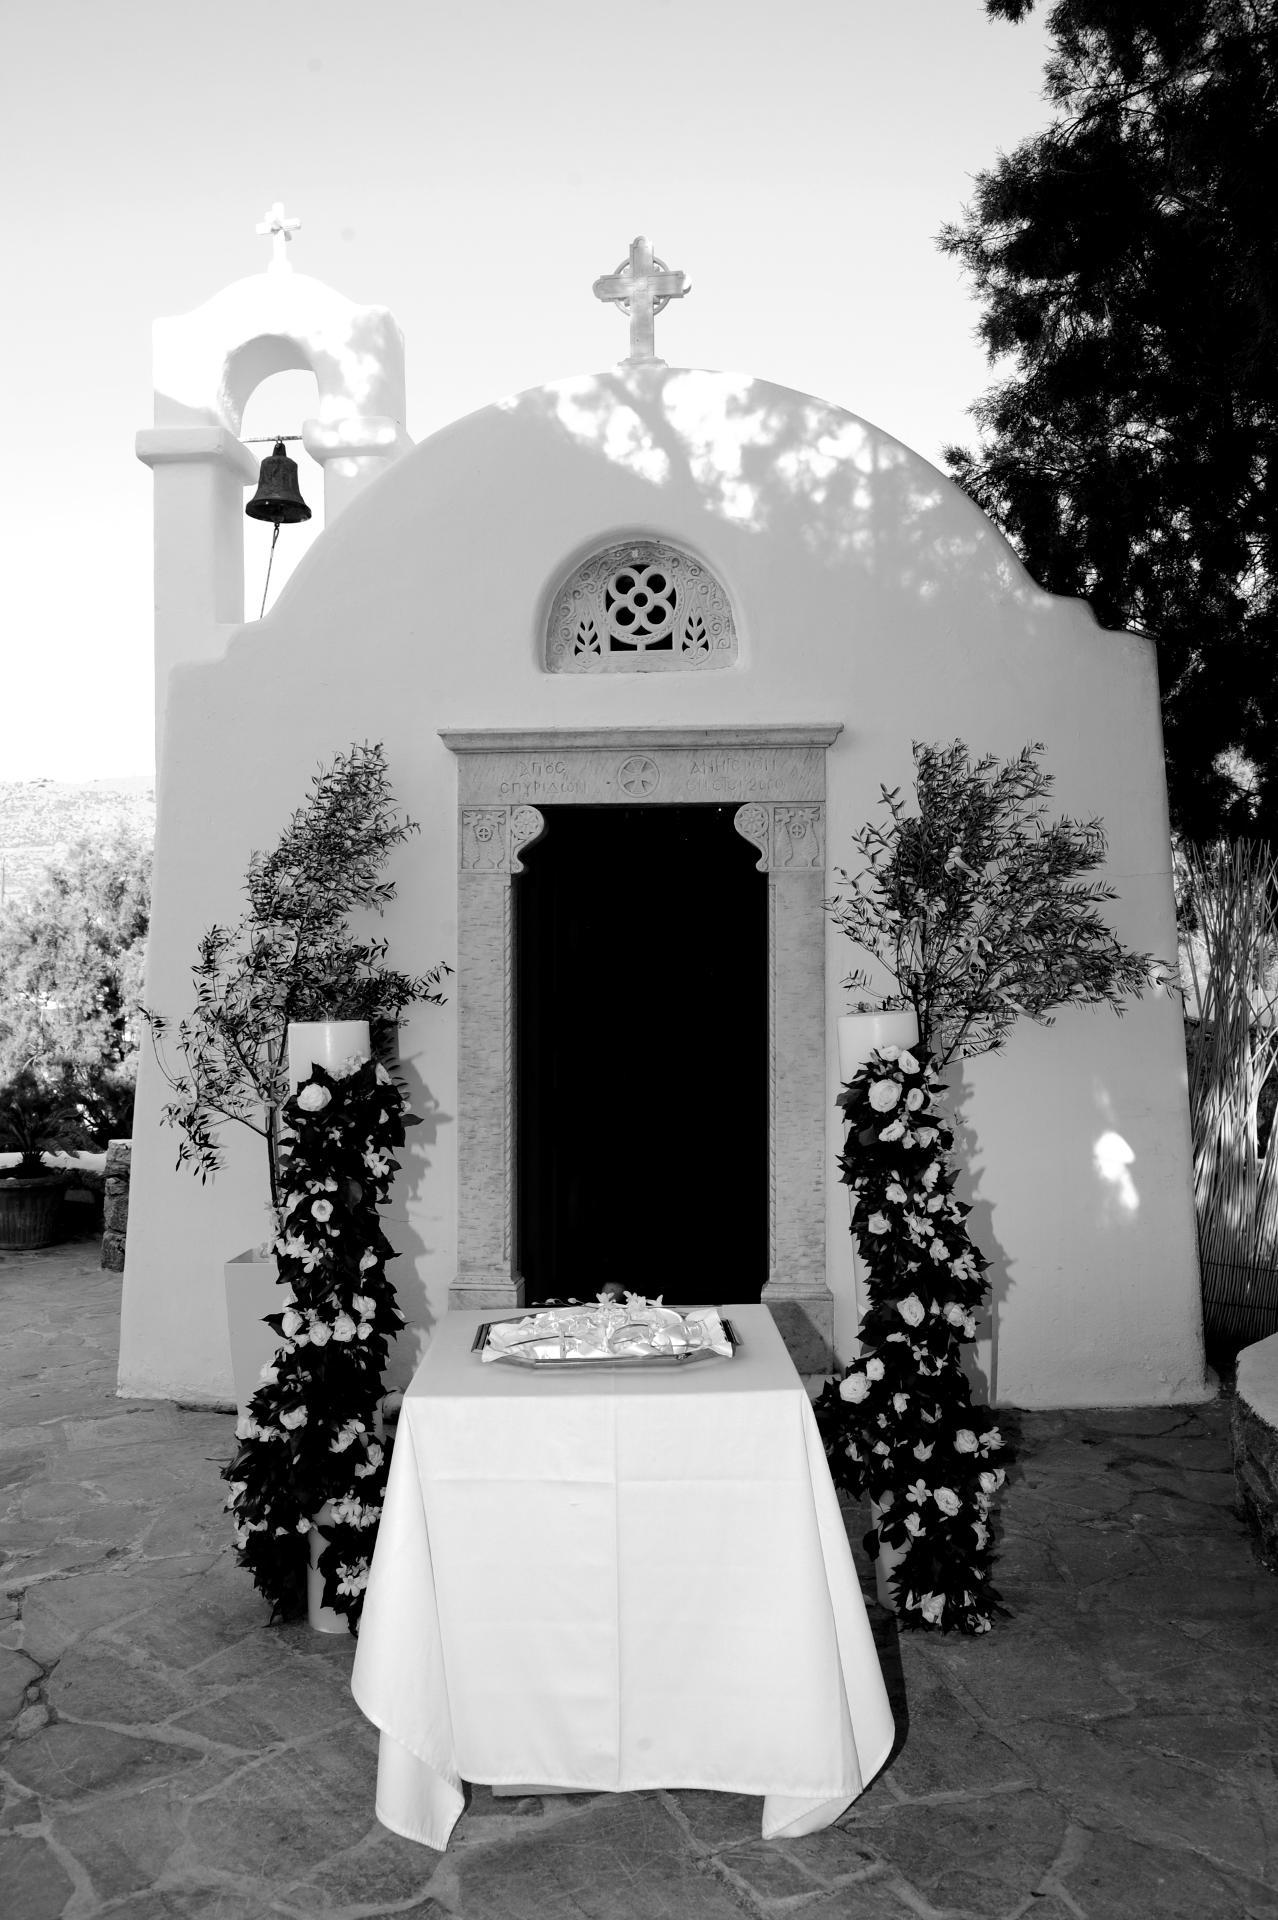 Wedding in Greece